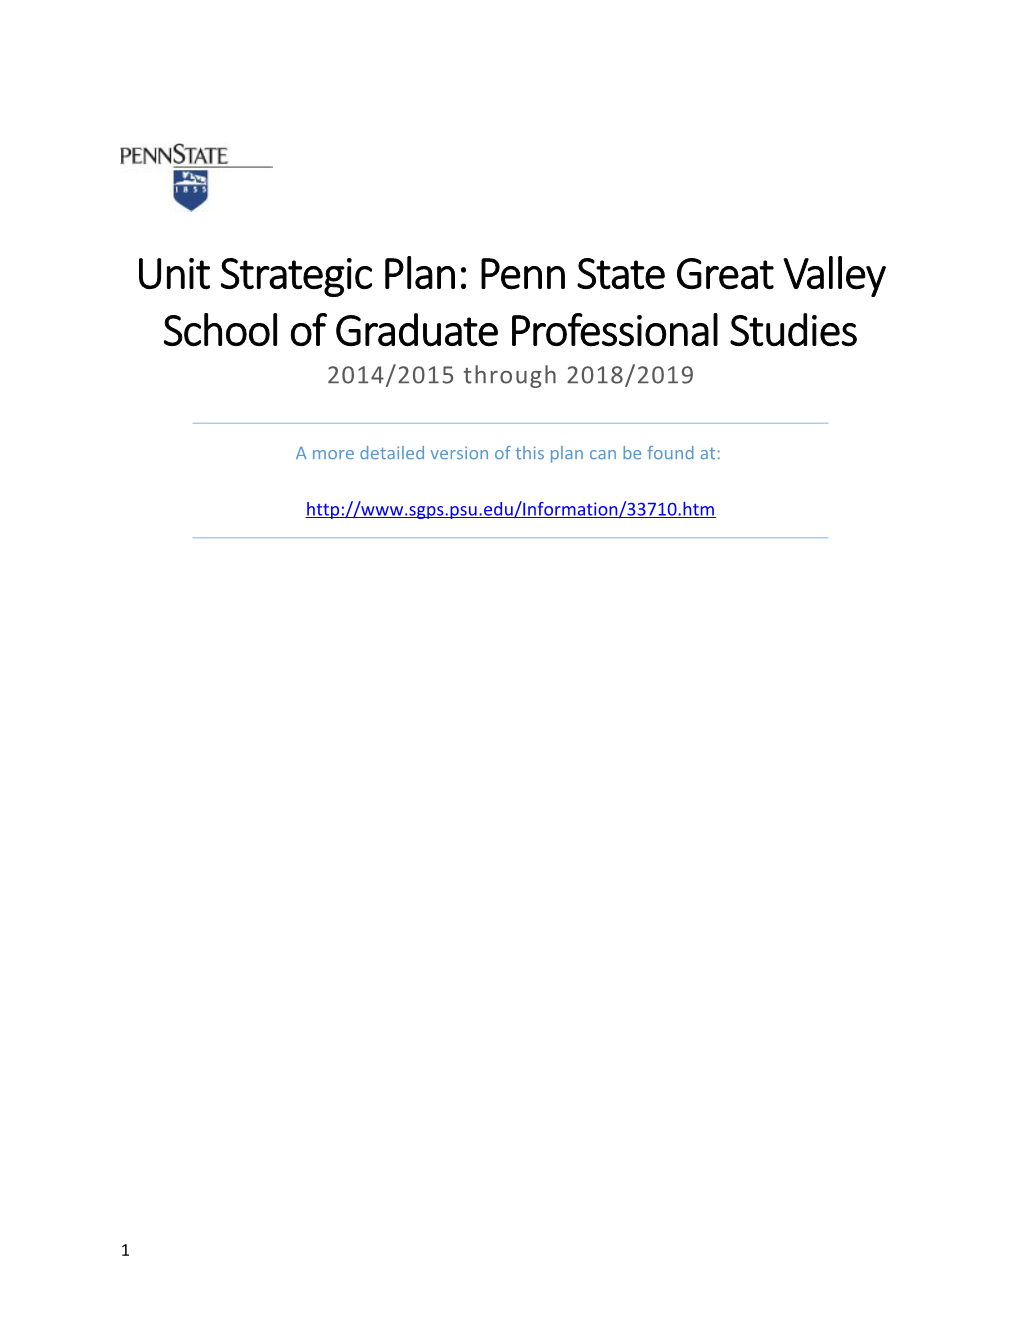 Penn State Great Valley Strategic Plan